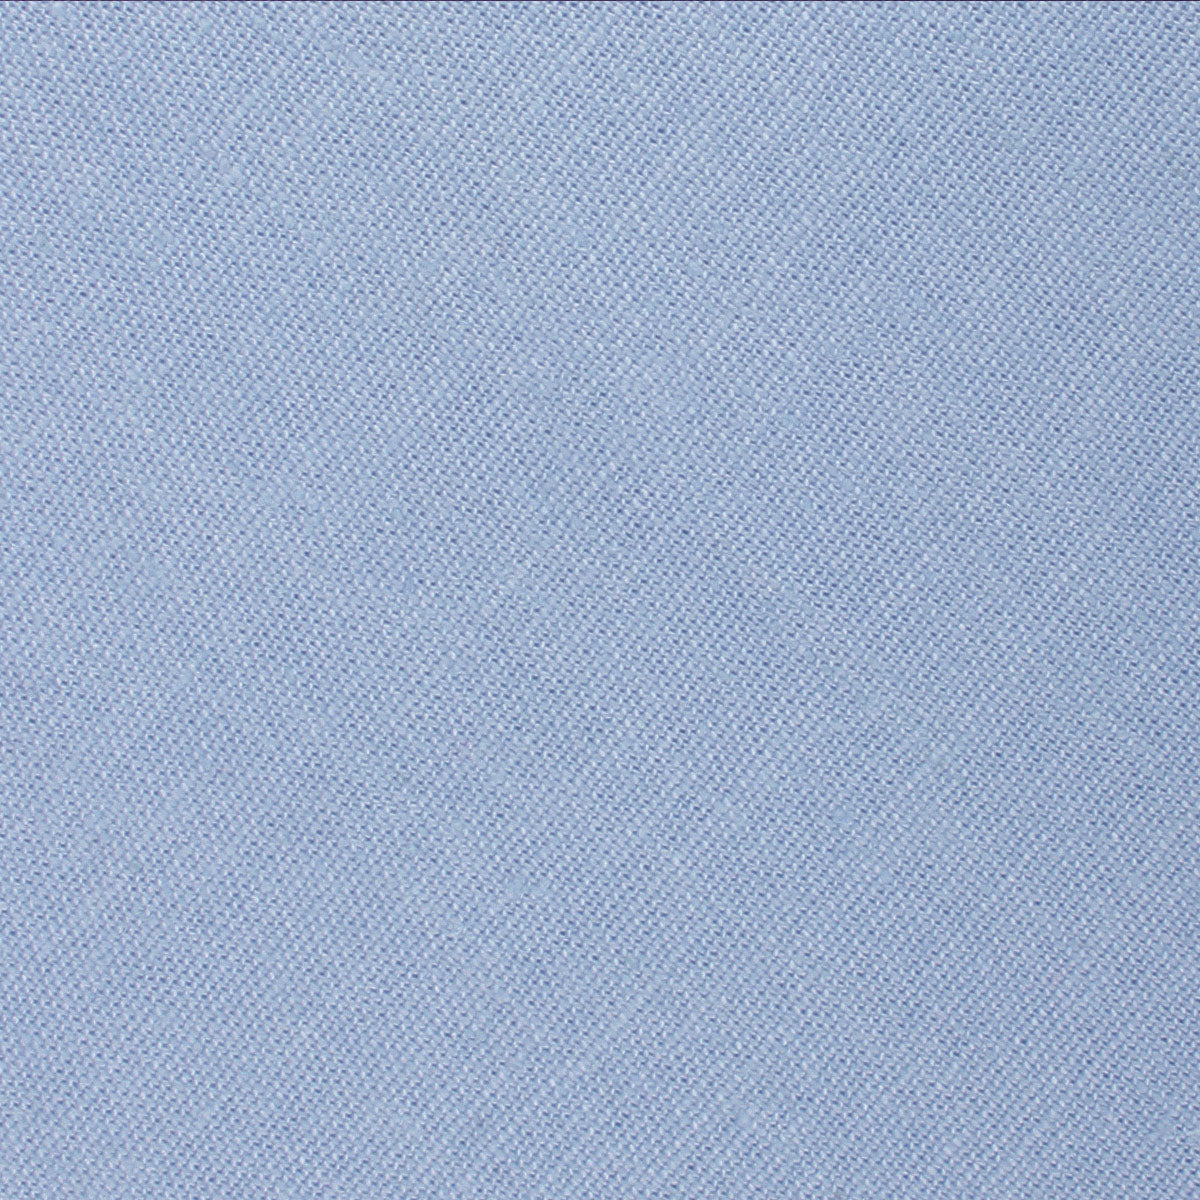 Ice Blue Linen Fabric Swatch